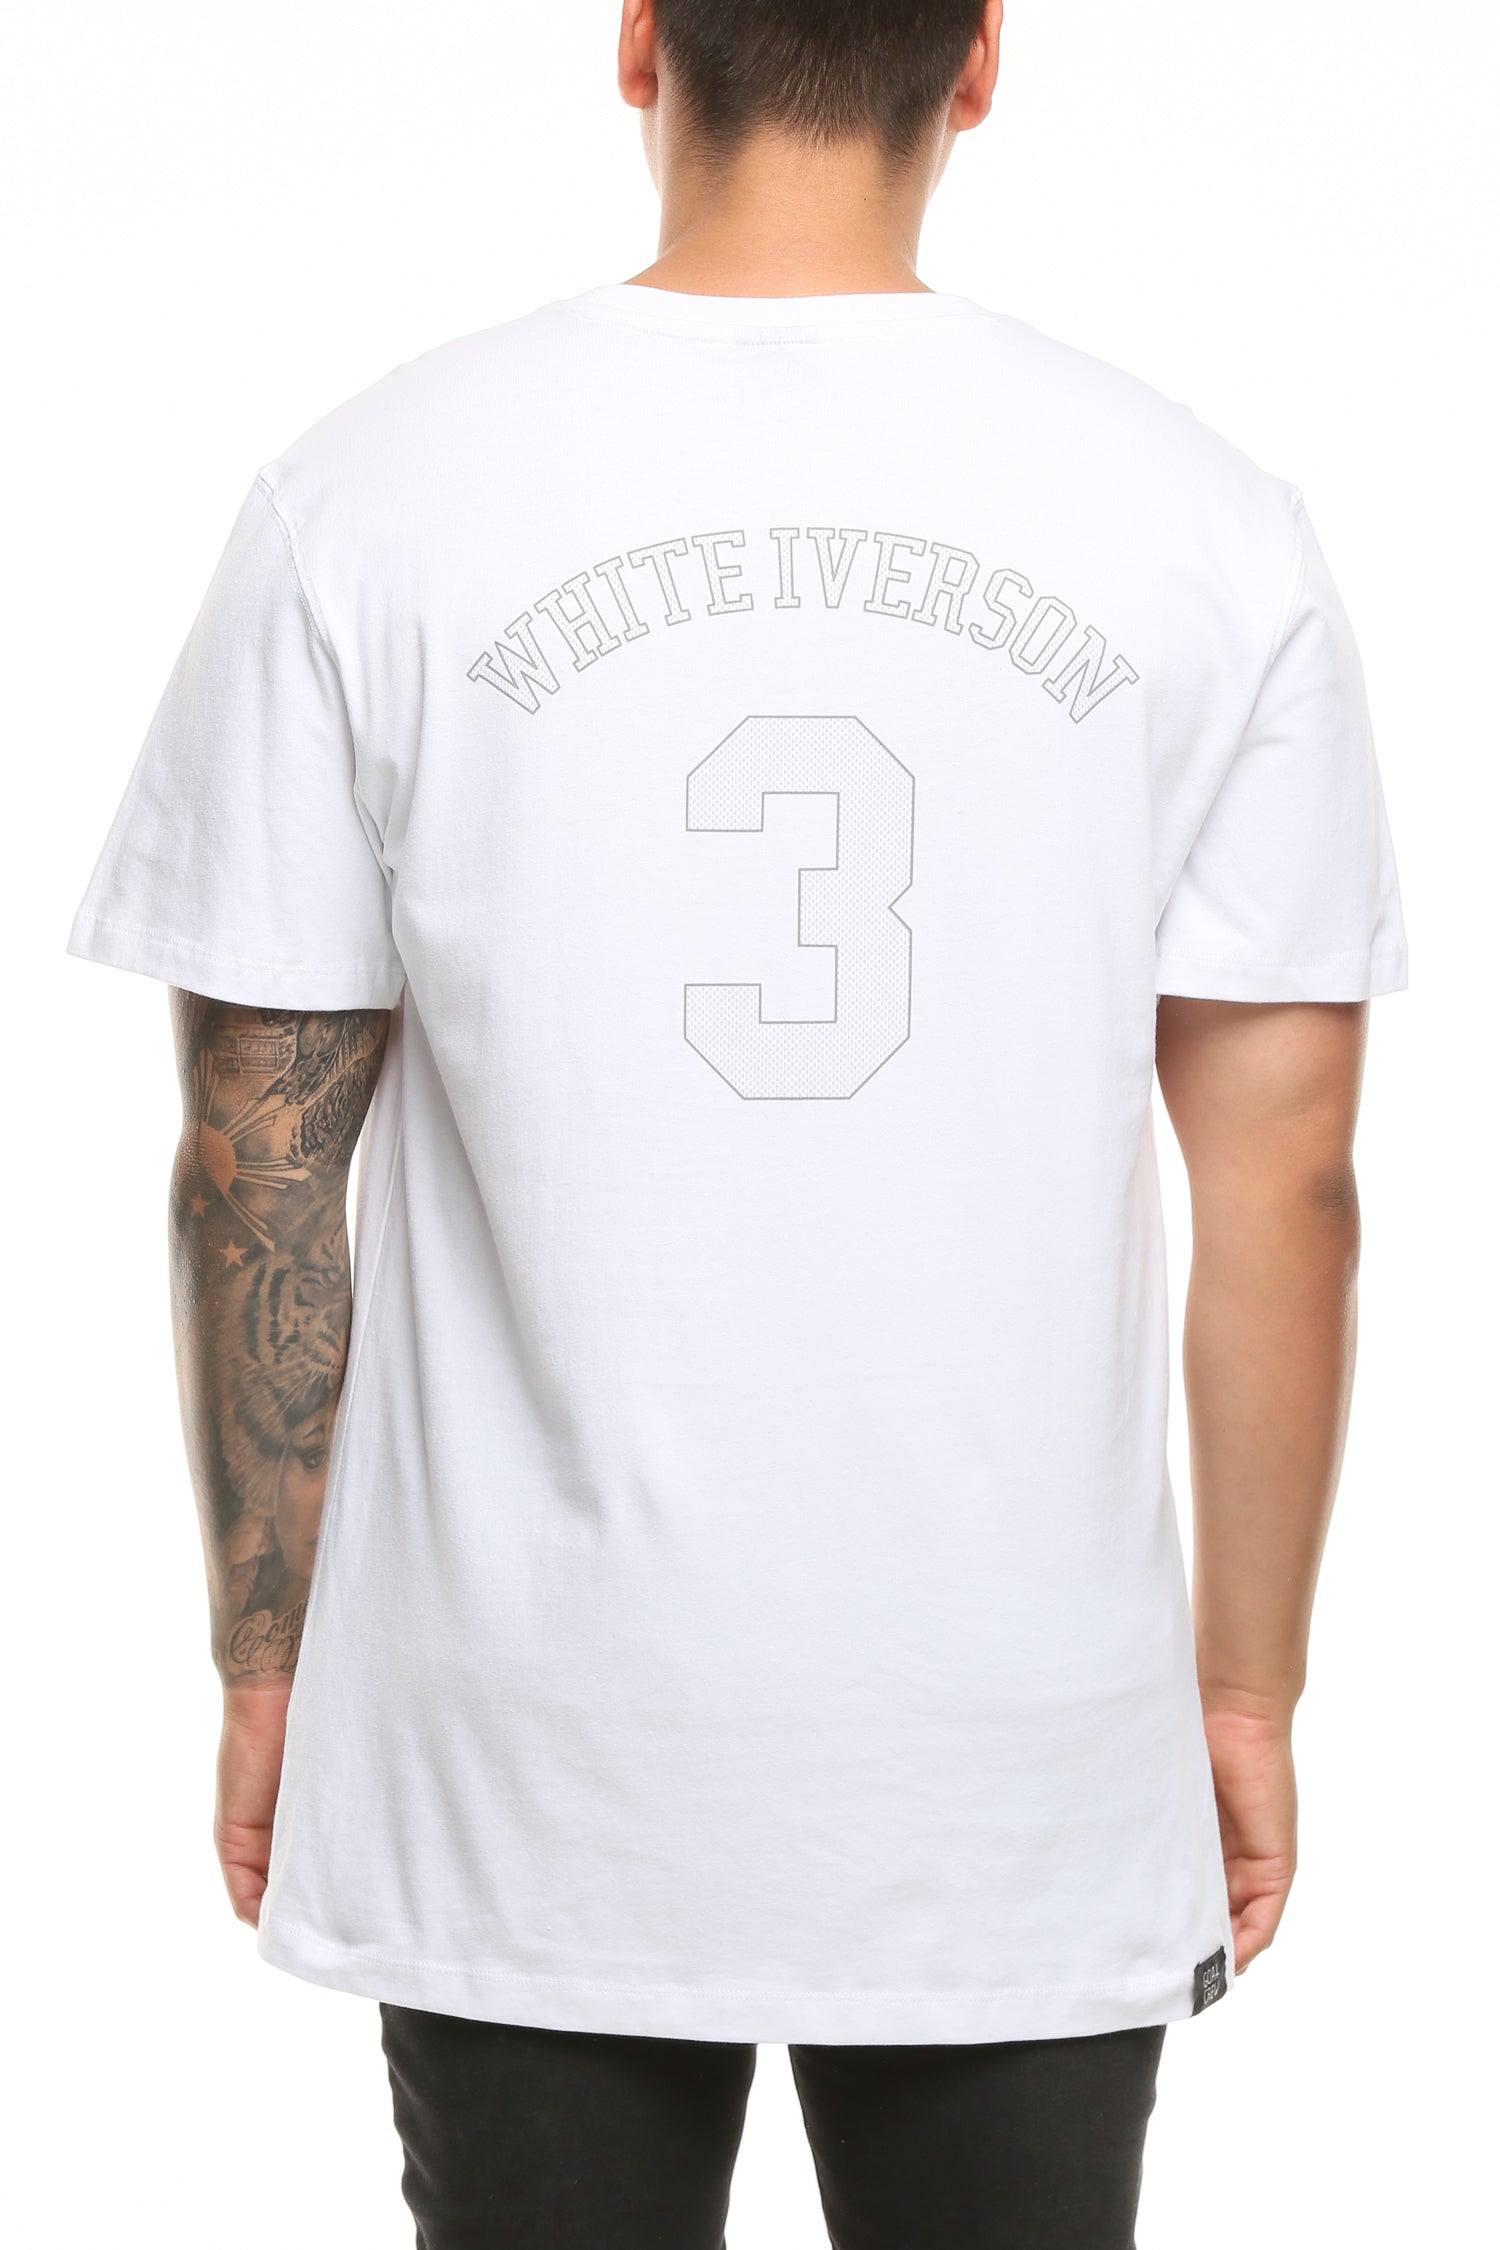 white iverson t shirt